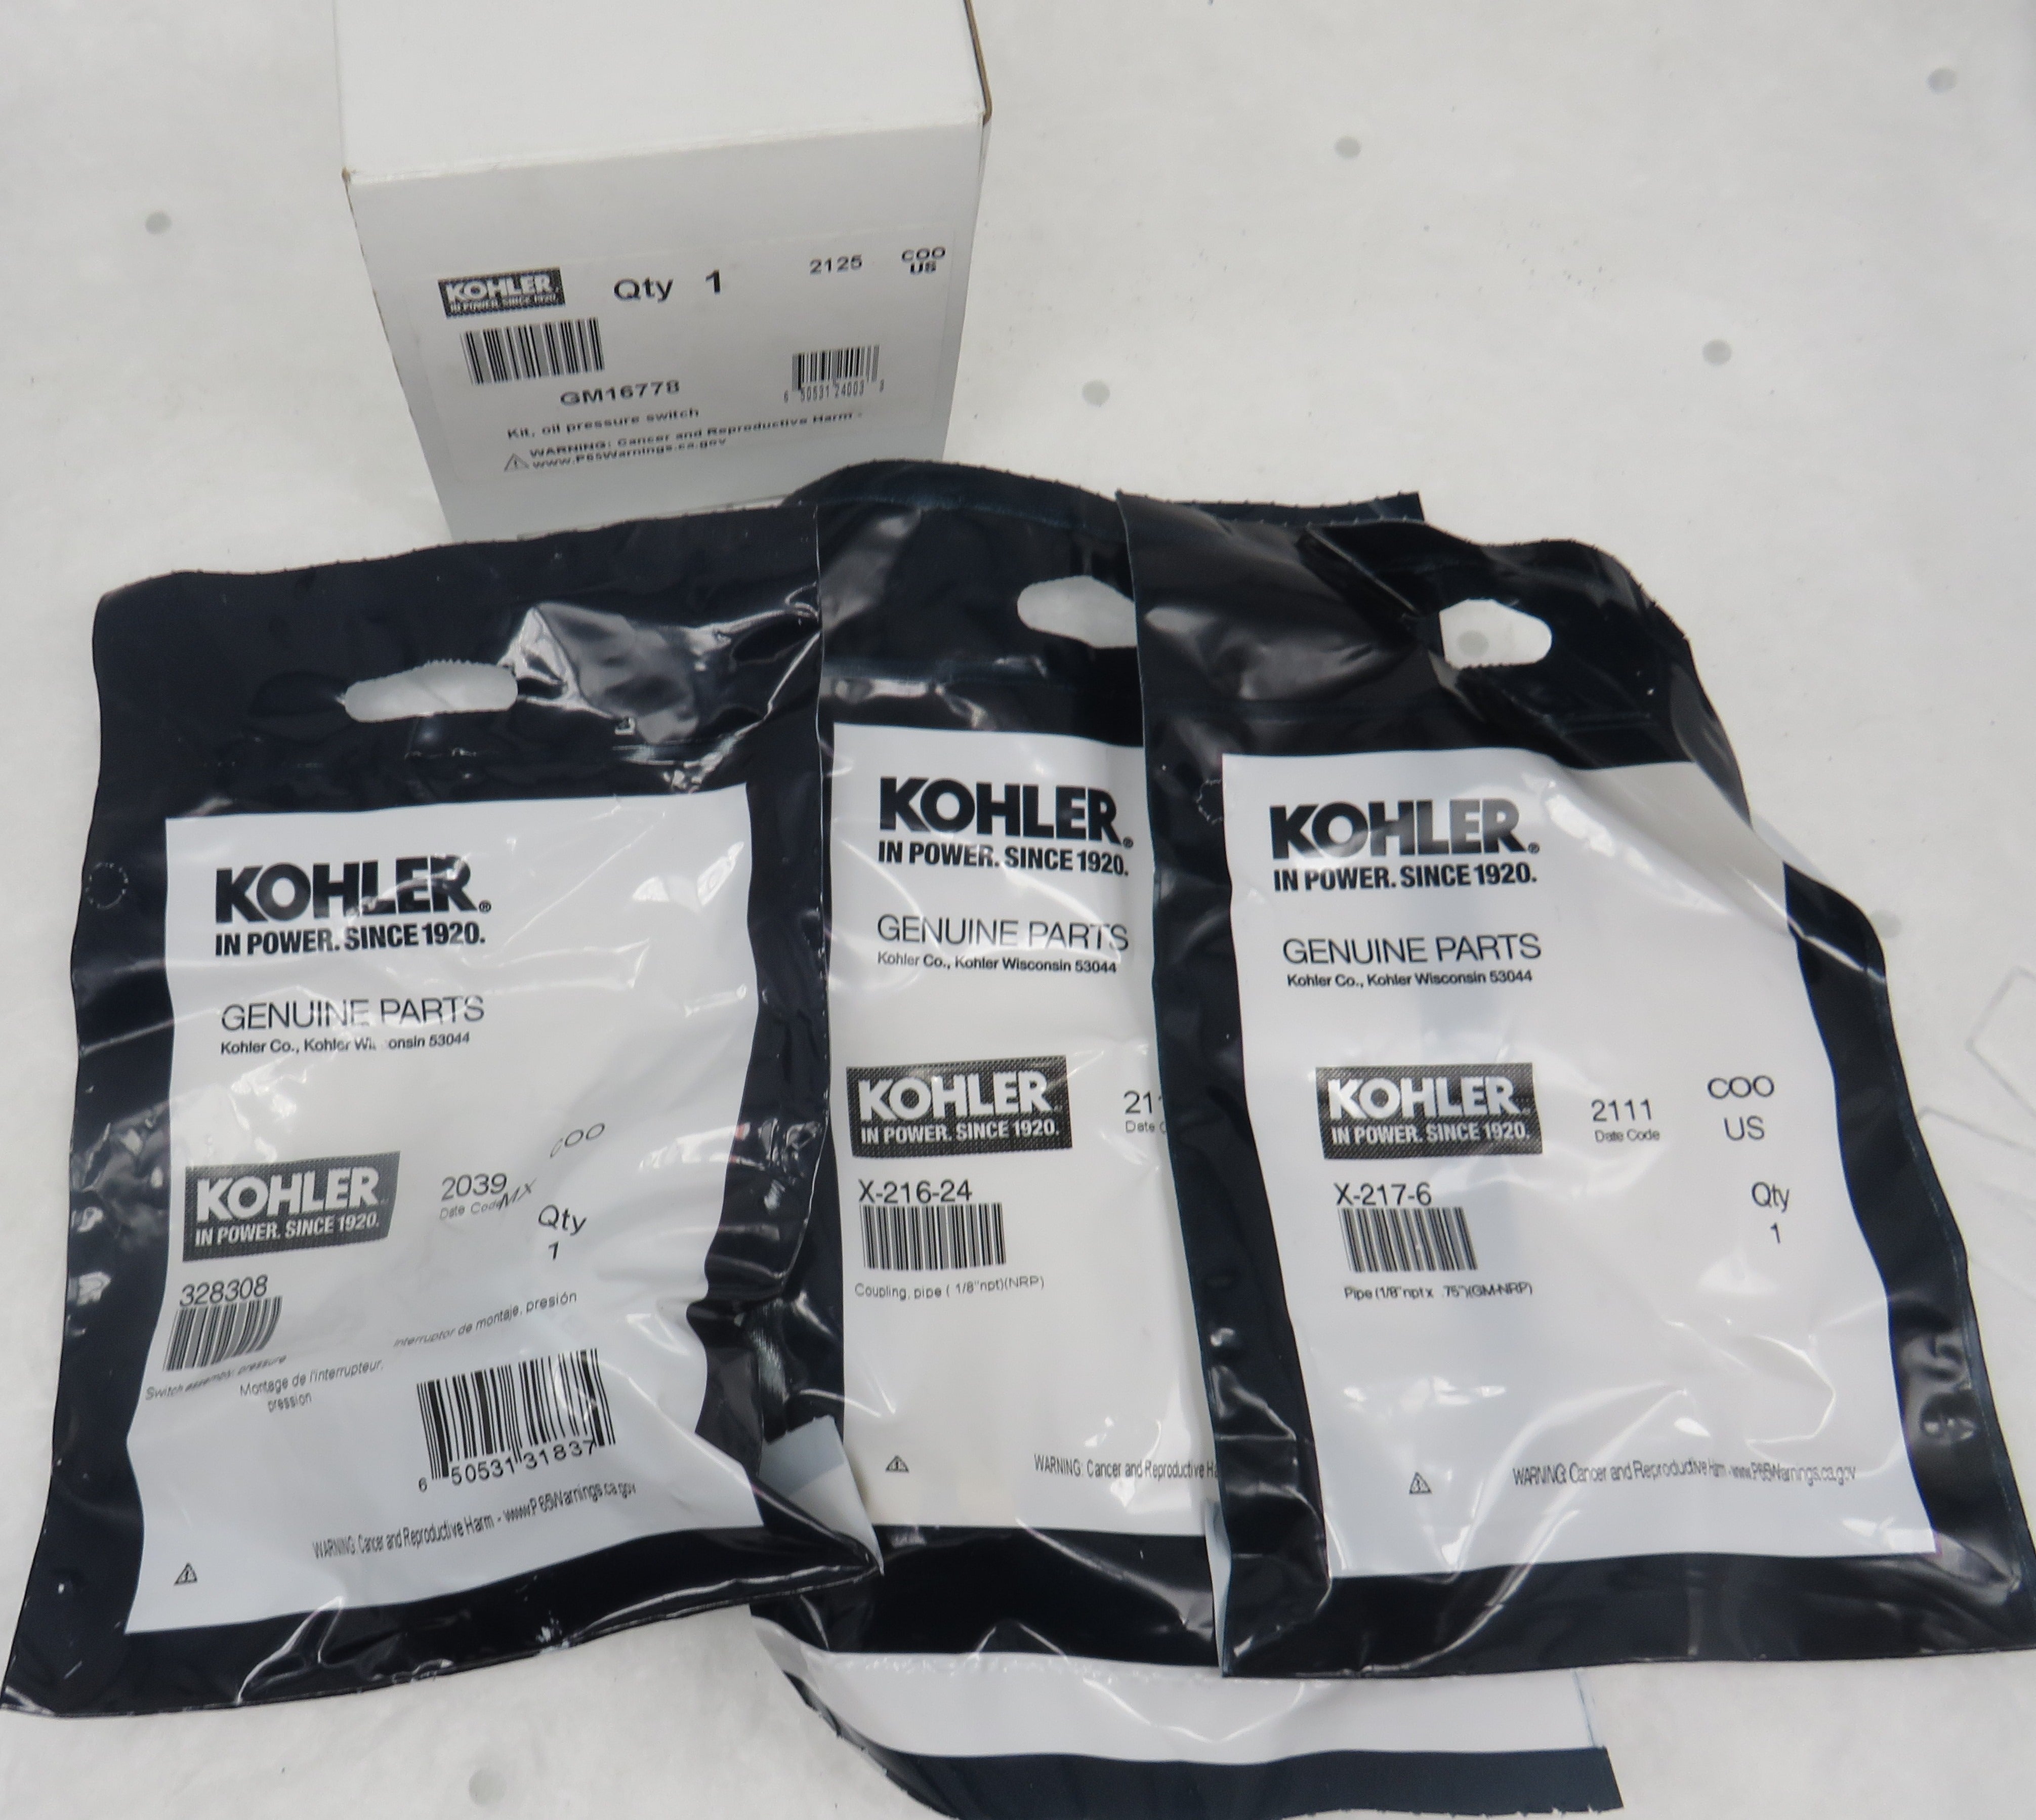 GM16778 Kohler Oil Pressure Switch Kit replaces 240978